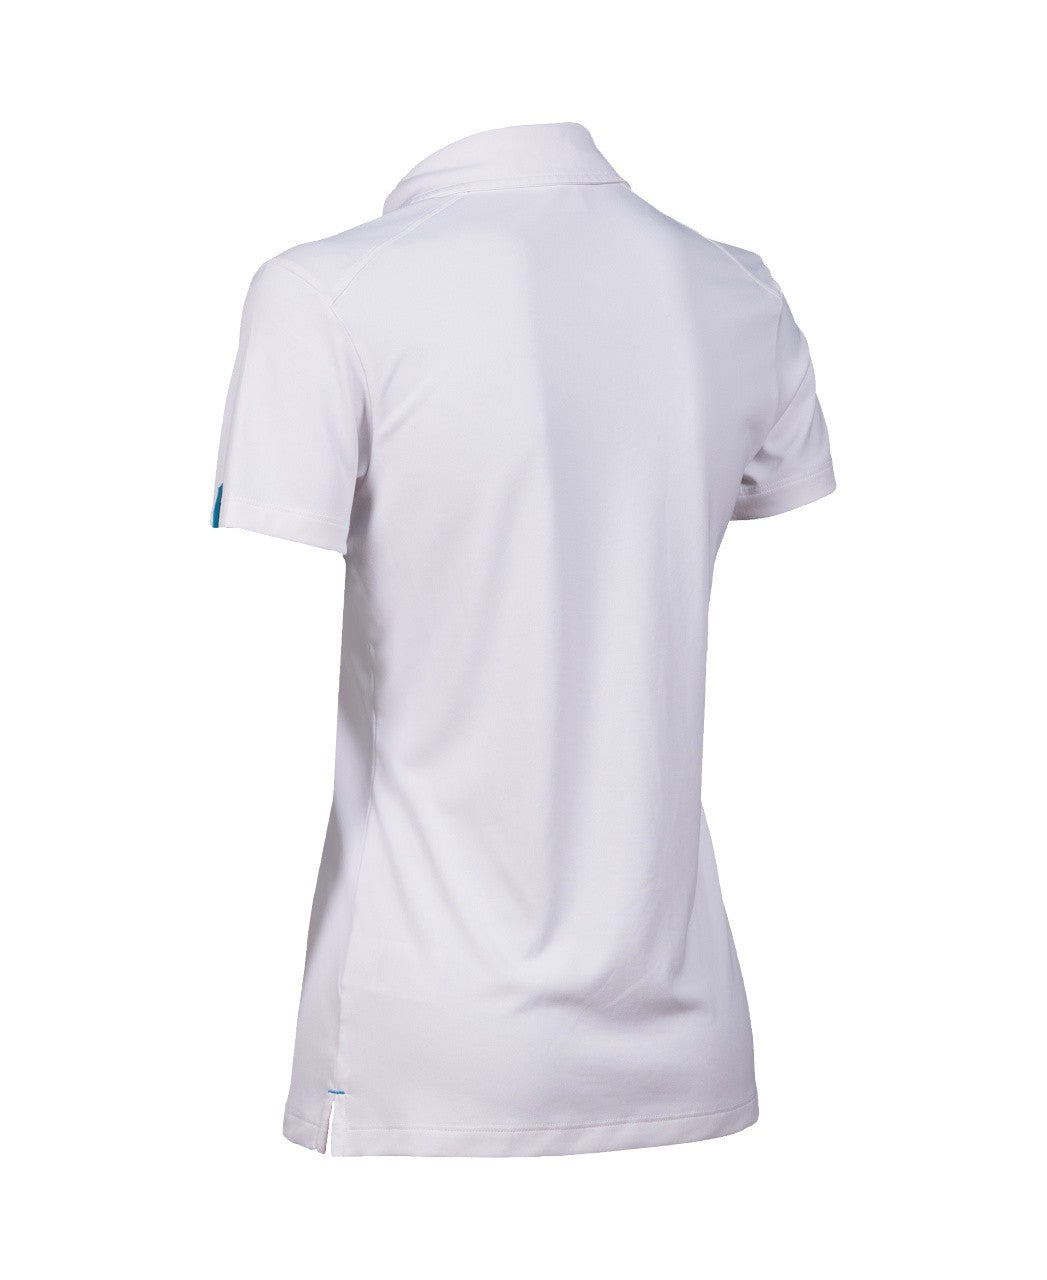 W Team Poloshirt Solid white